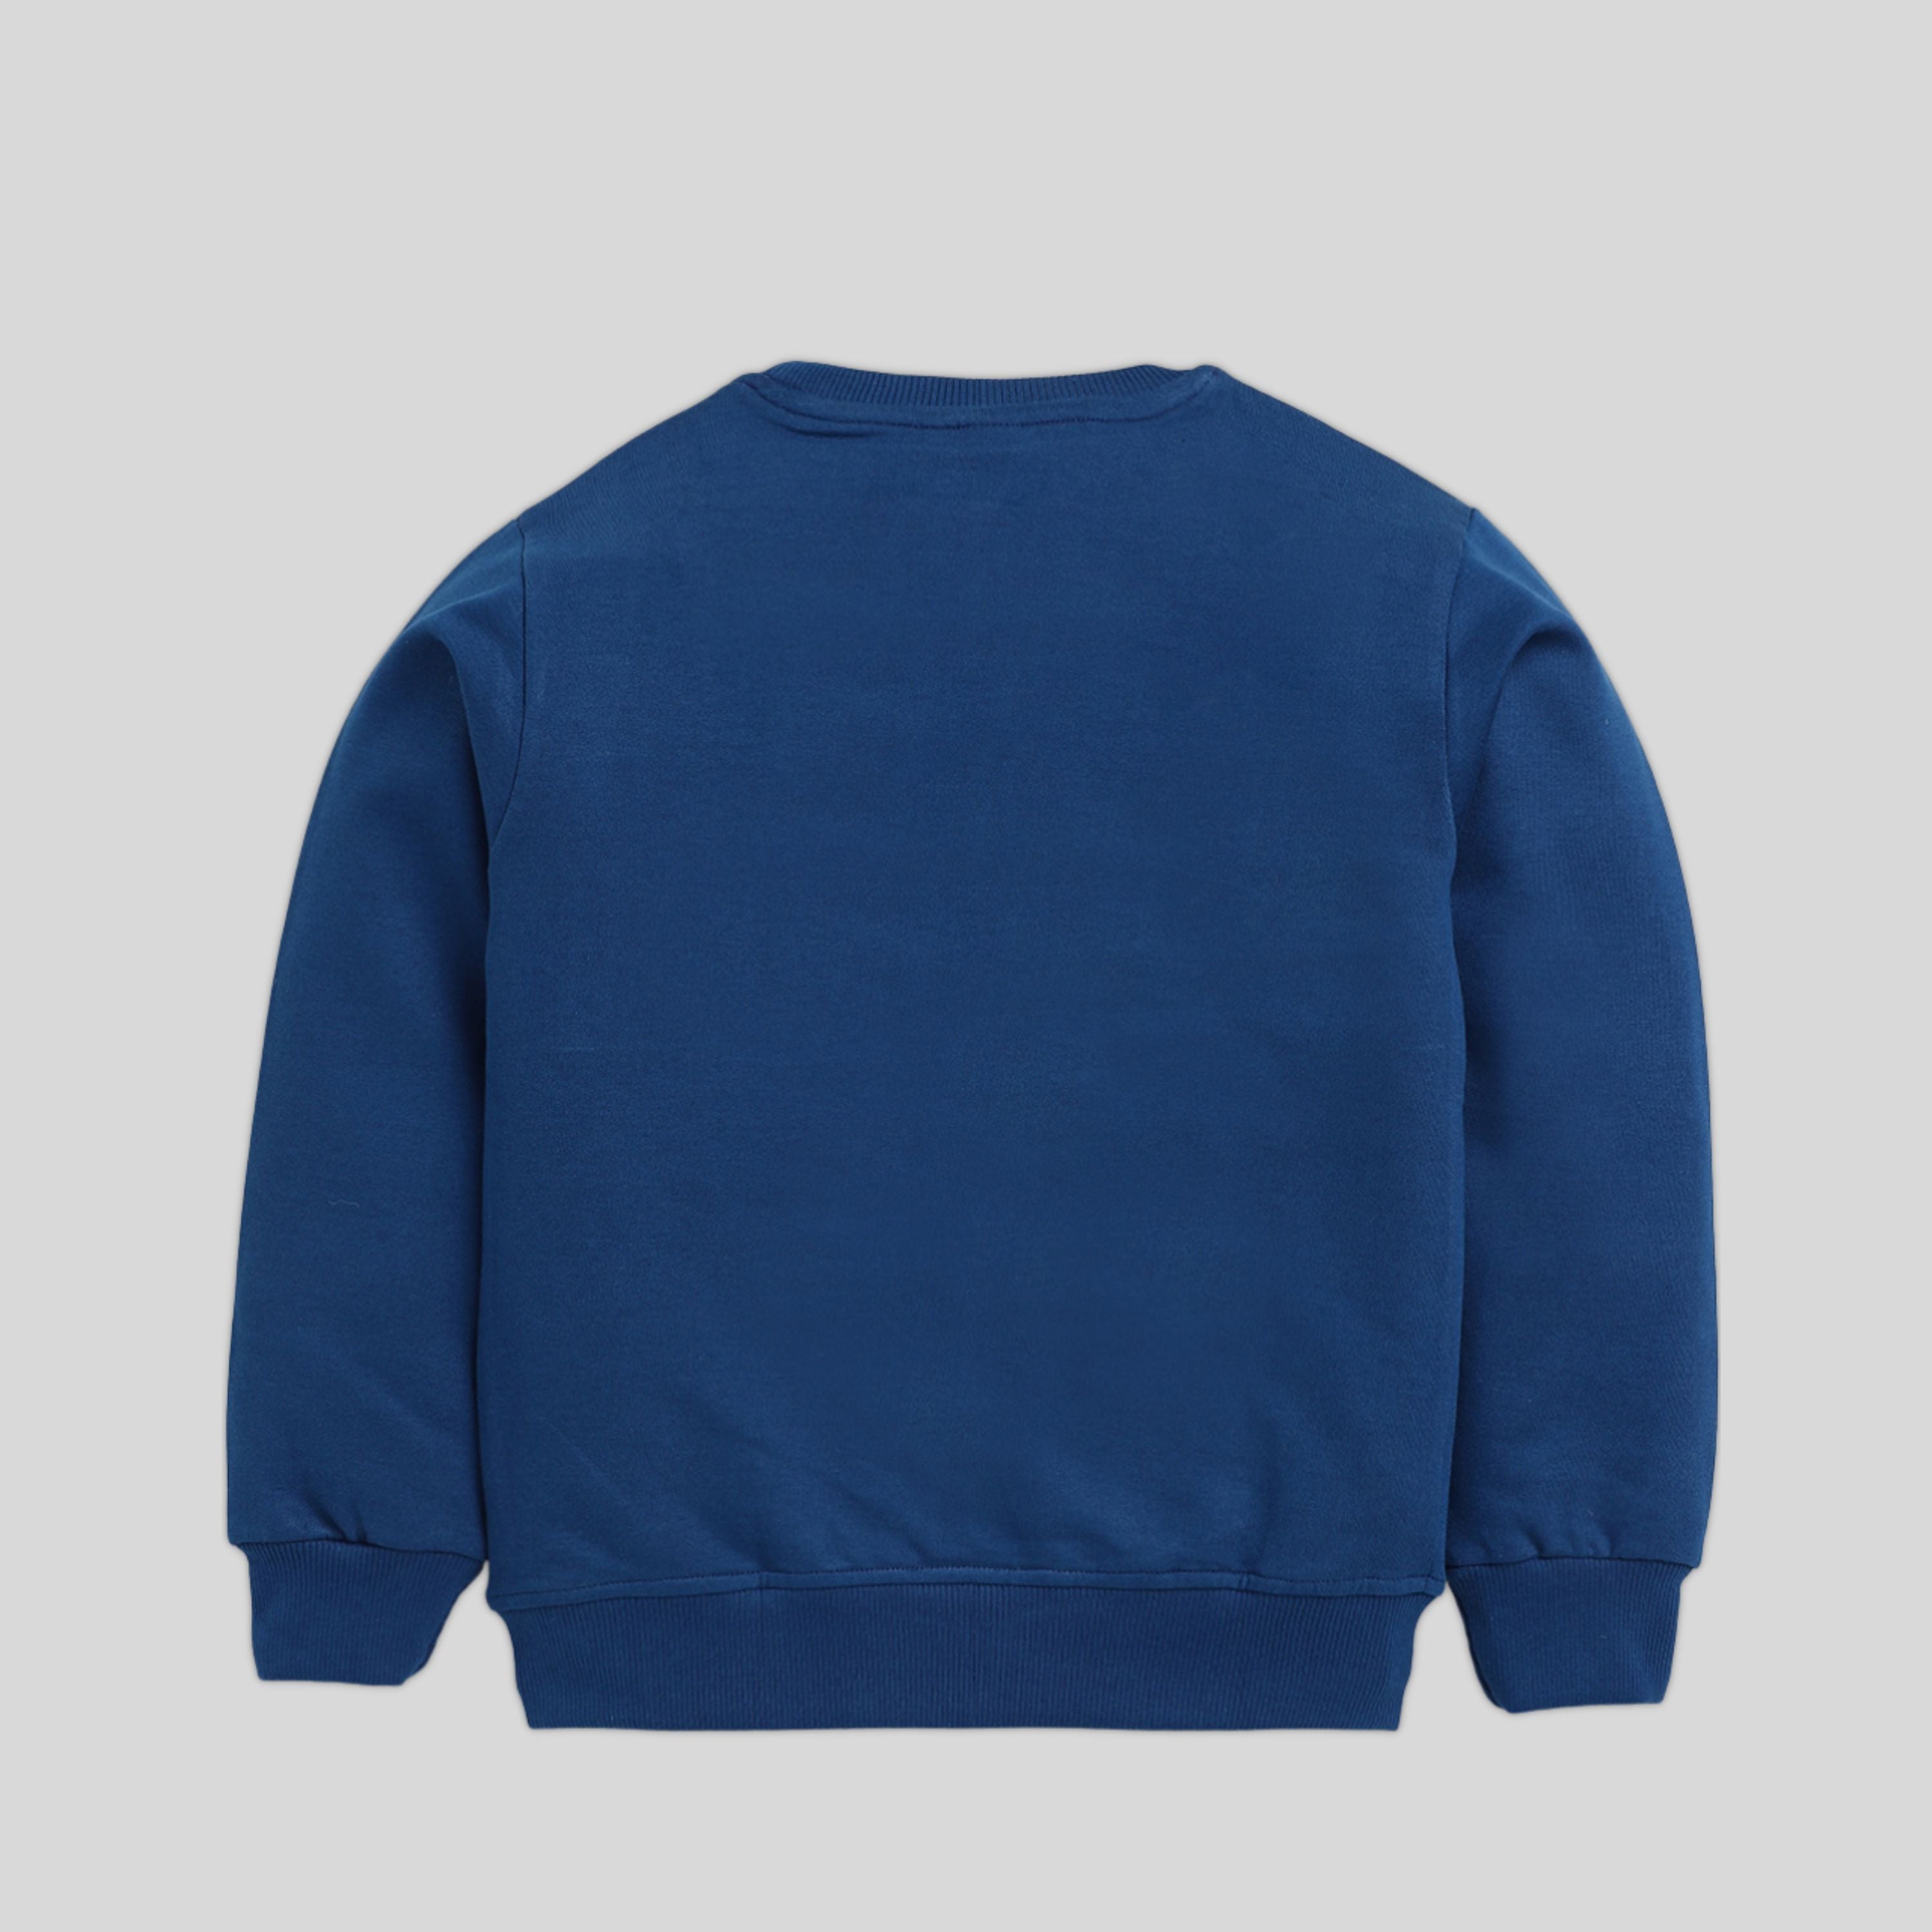 Printed Sweatshirt For Boy- Bright Navy